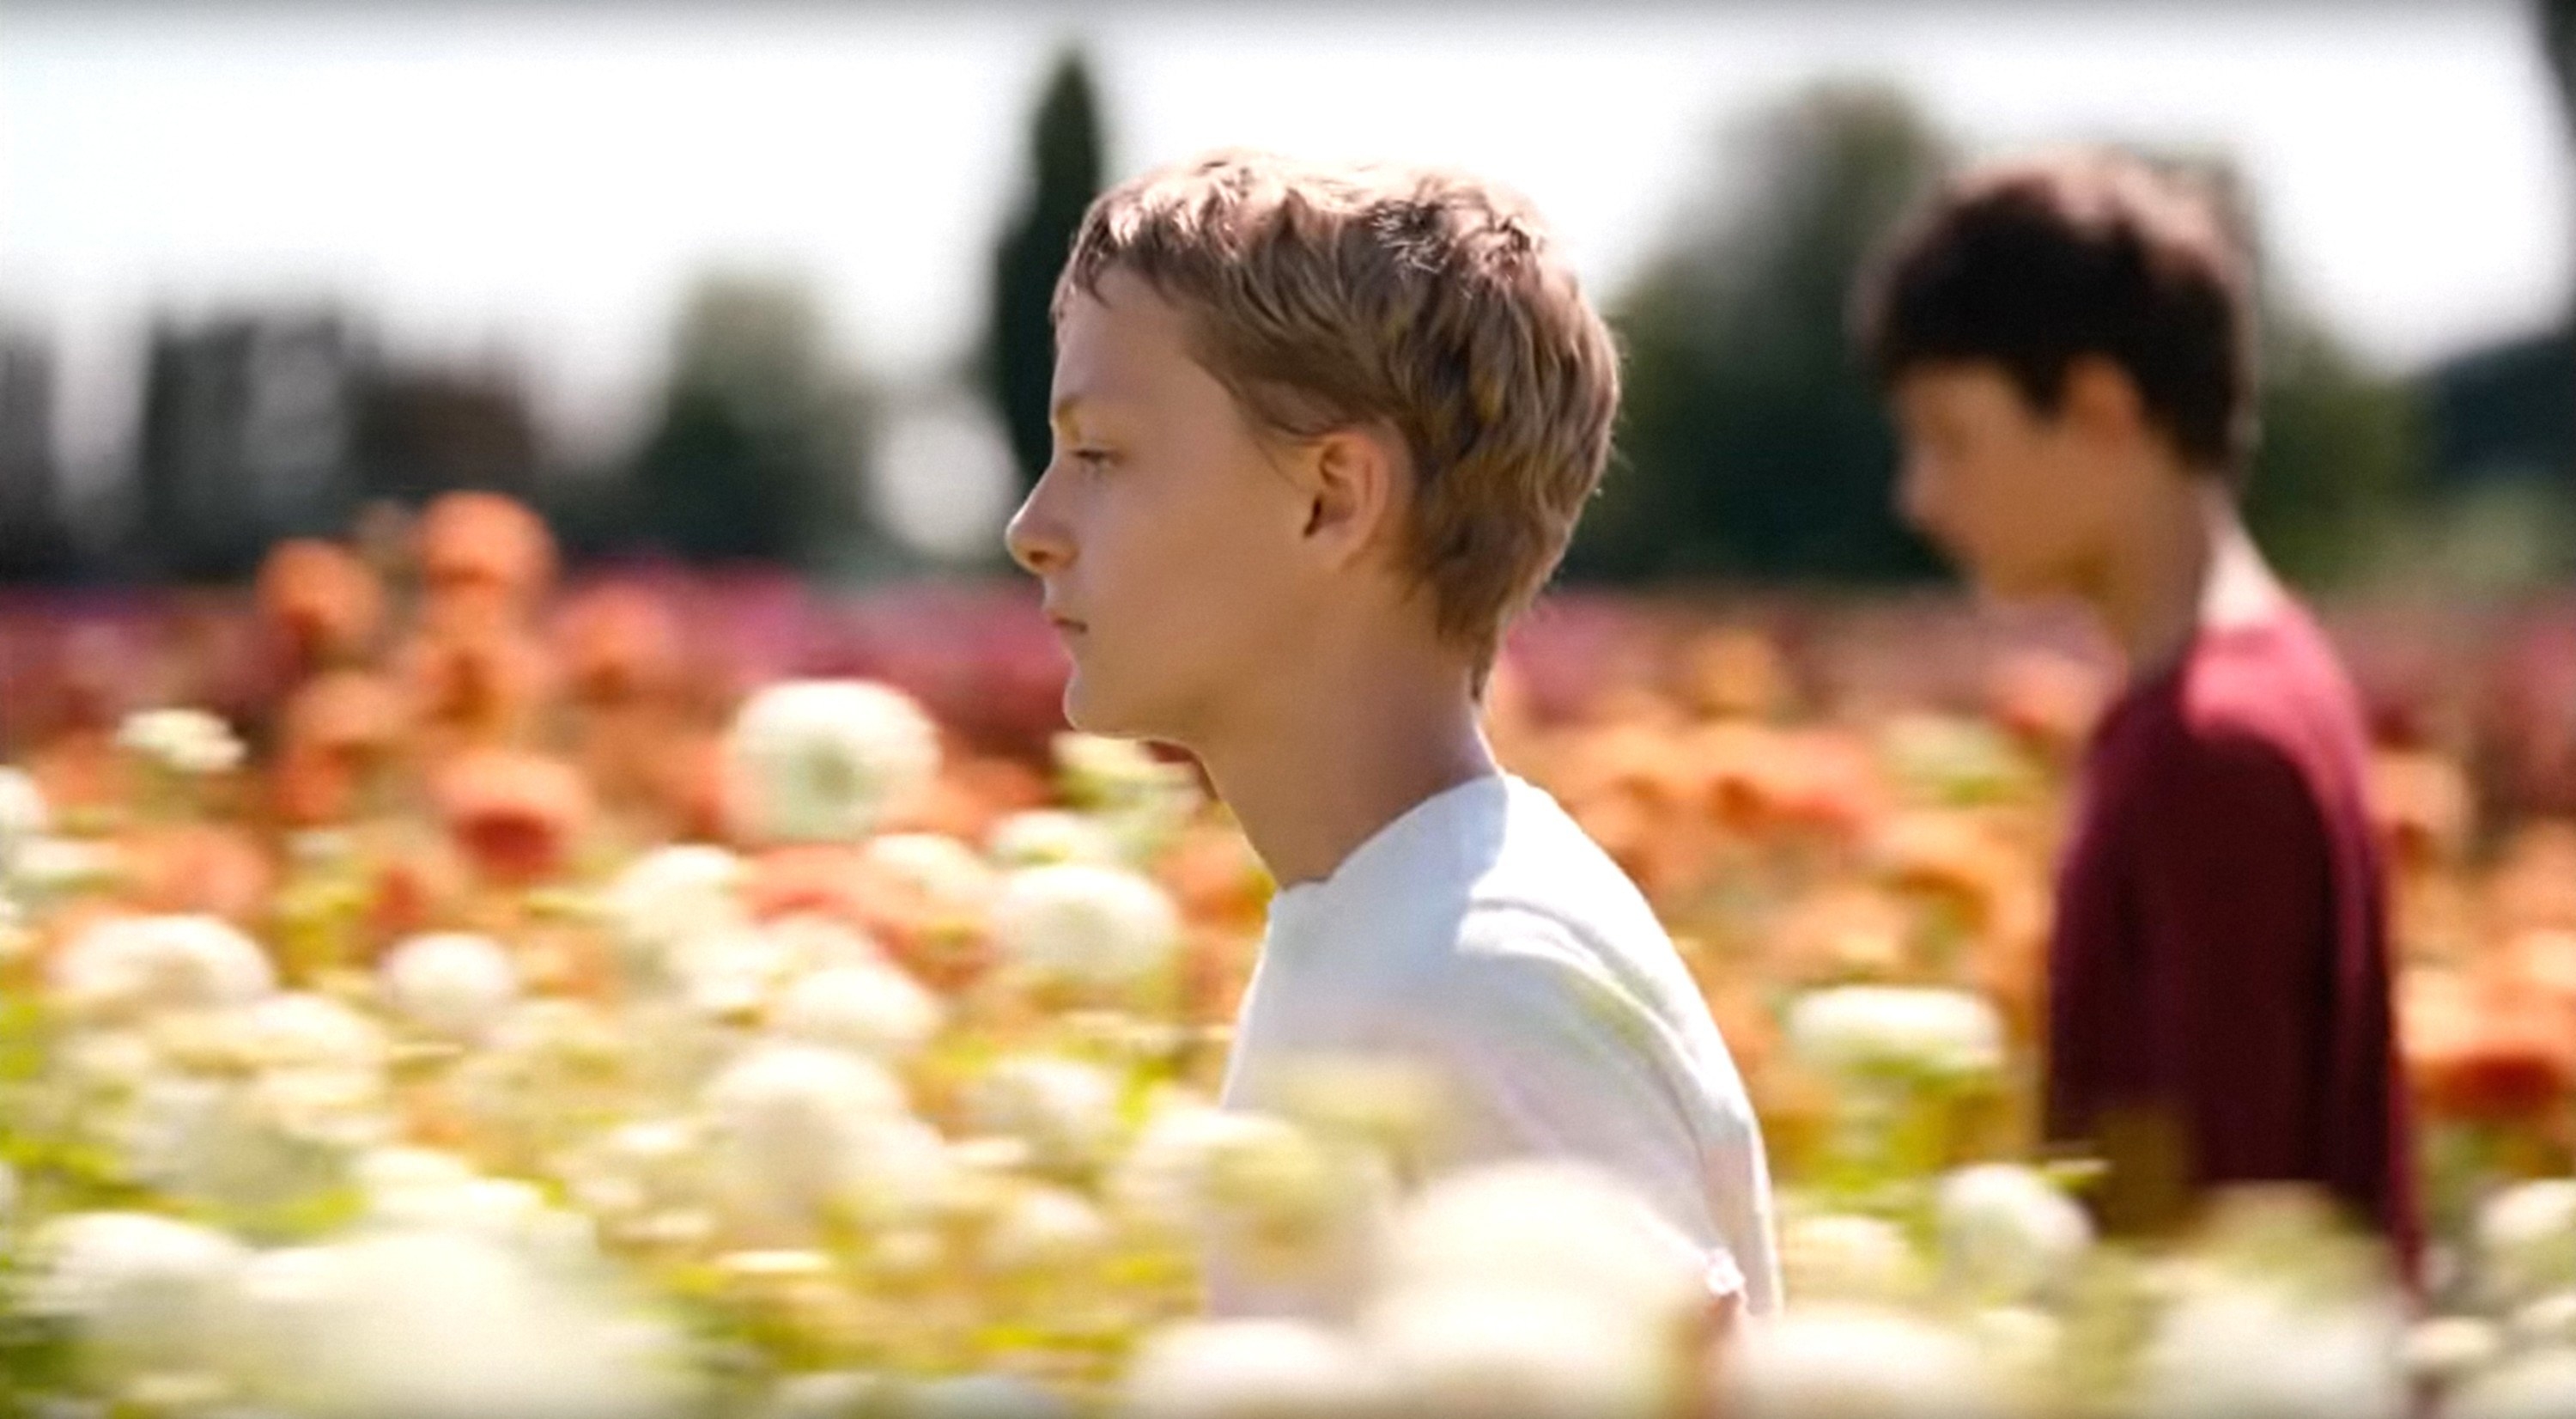 Eden Dambrine and Gustav De Waele walk through a field of flowers